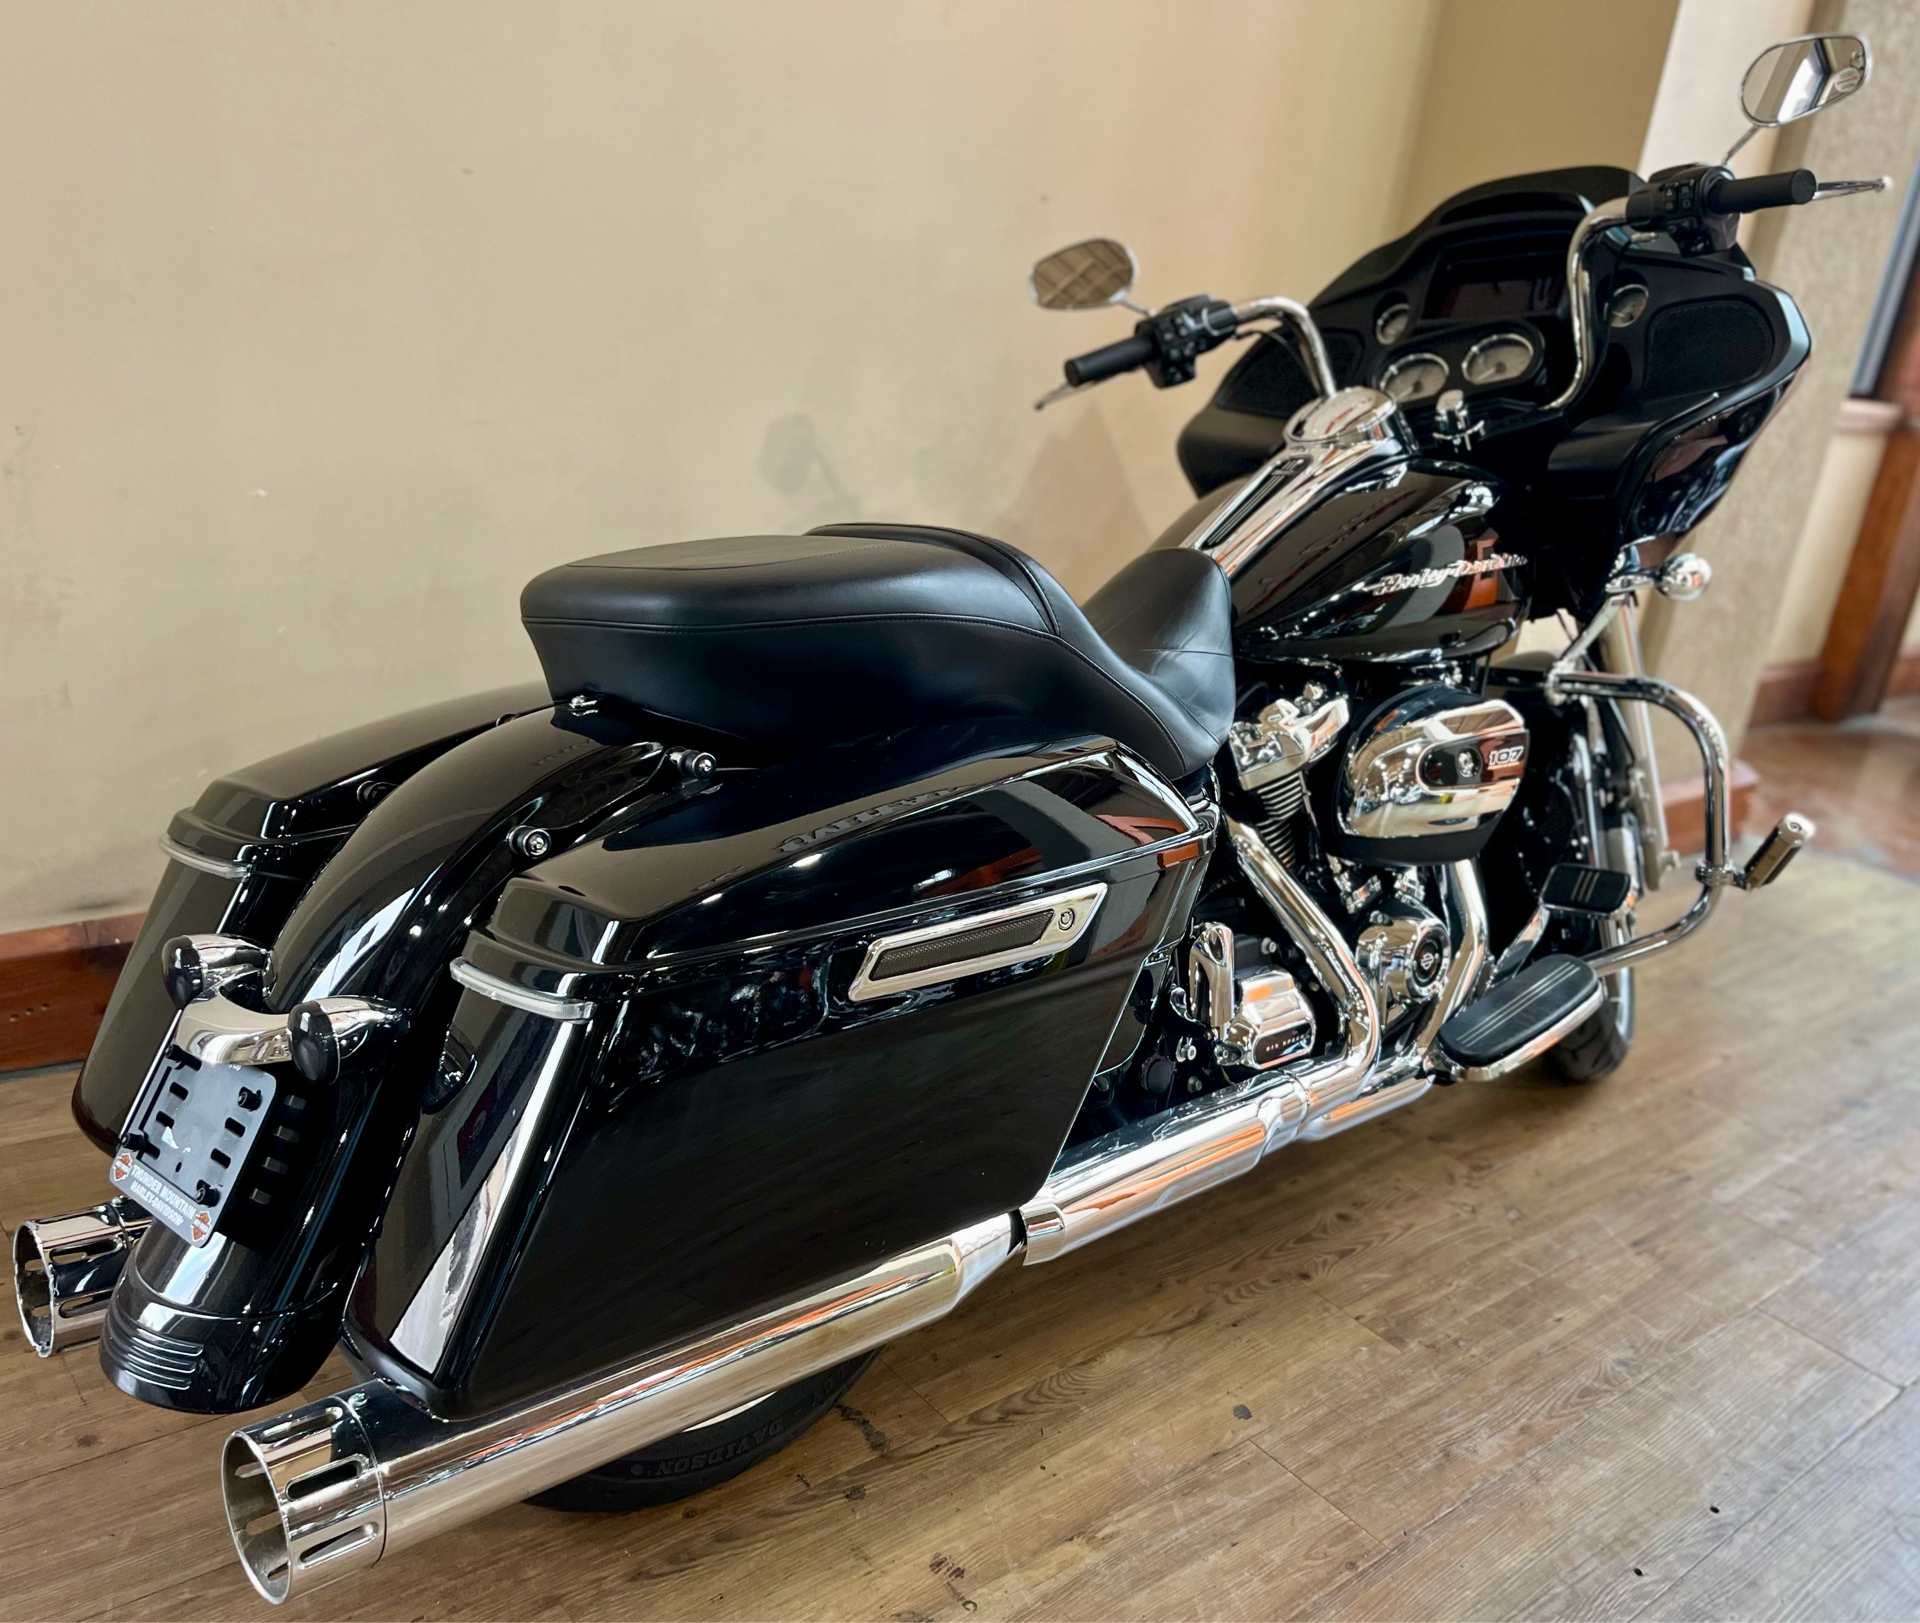 2020 Harley-Davidson Road Glide® in Loveland, Colorado - Photo 3